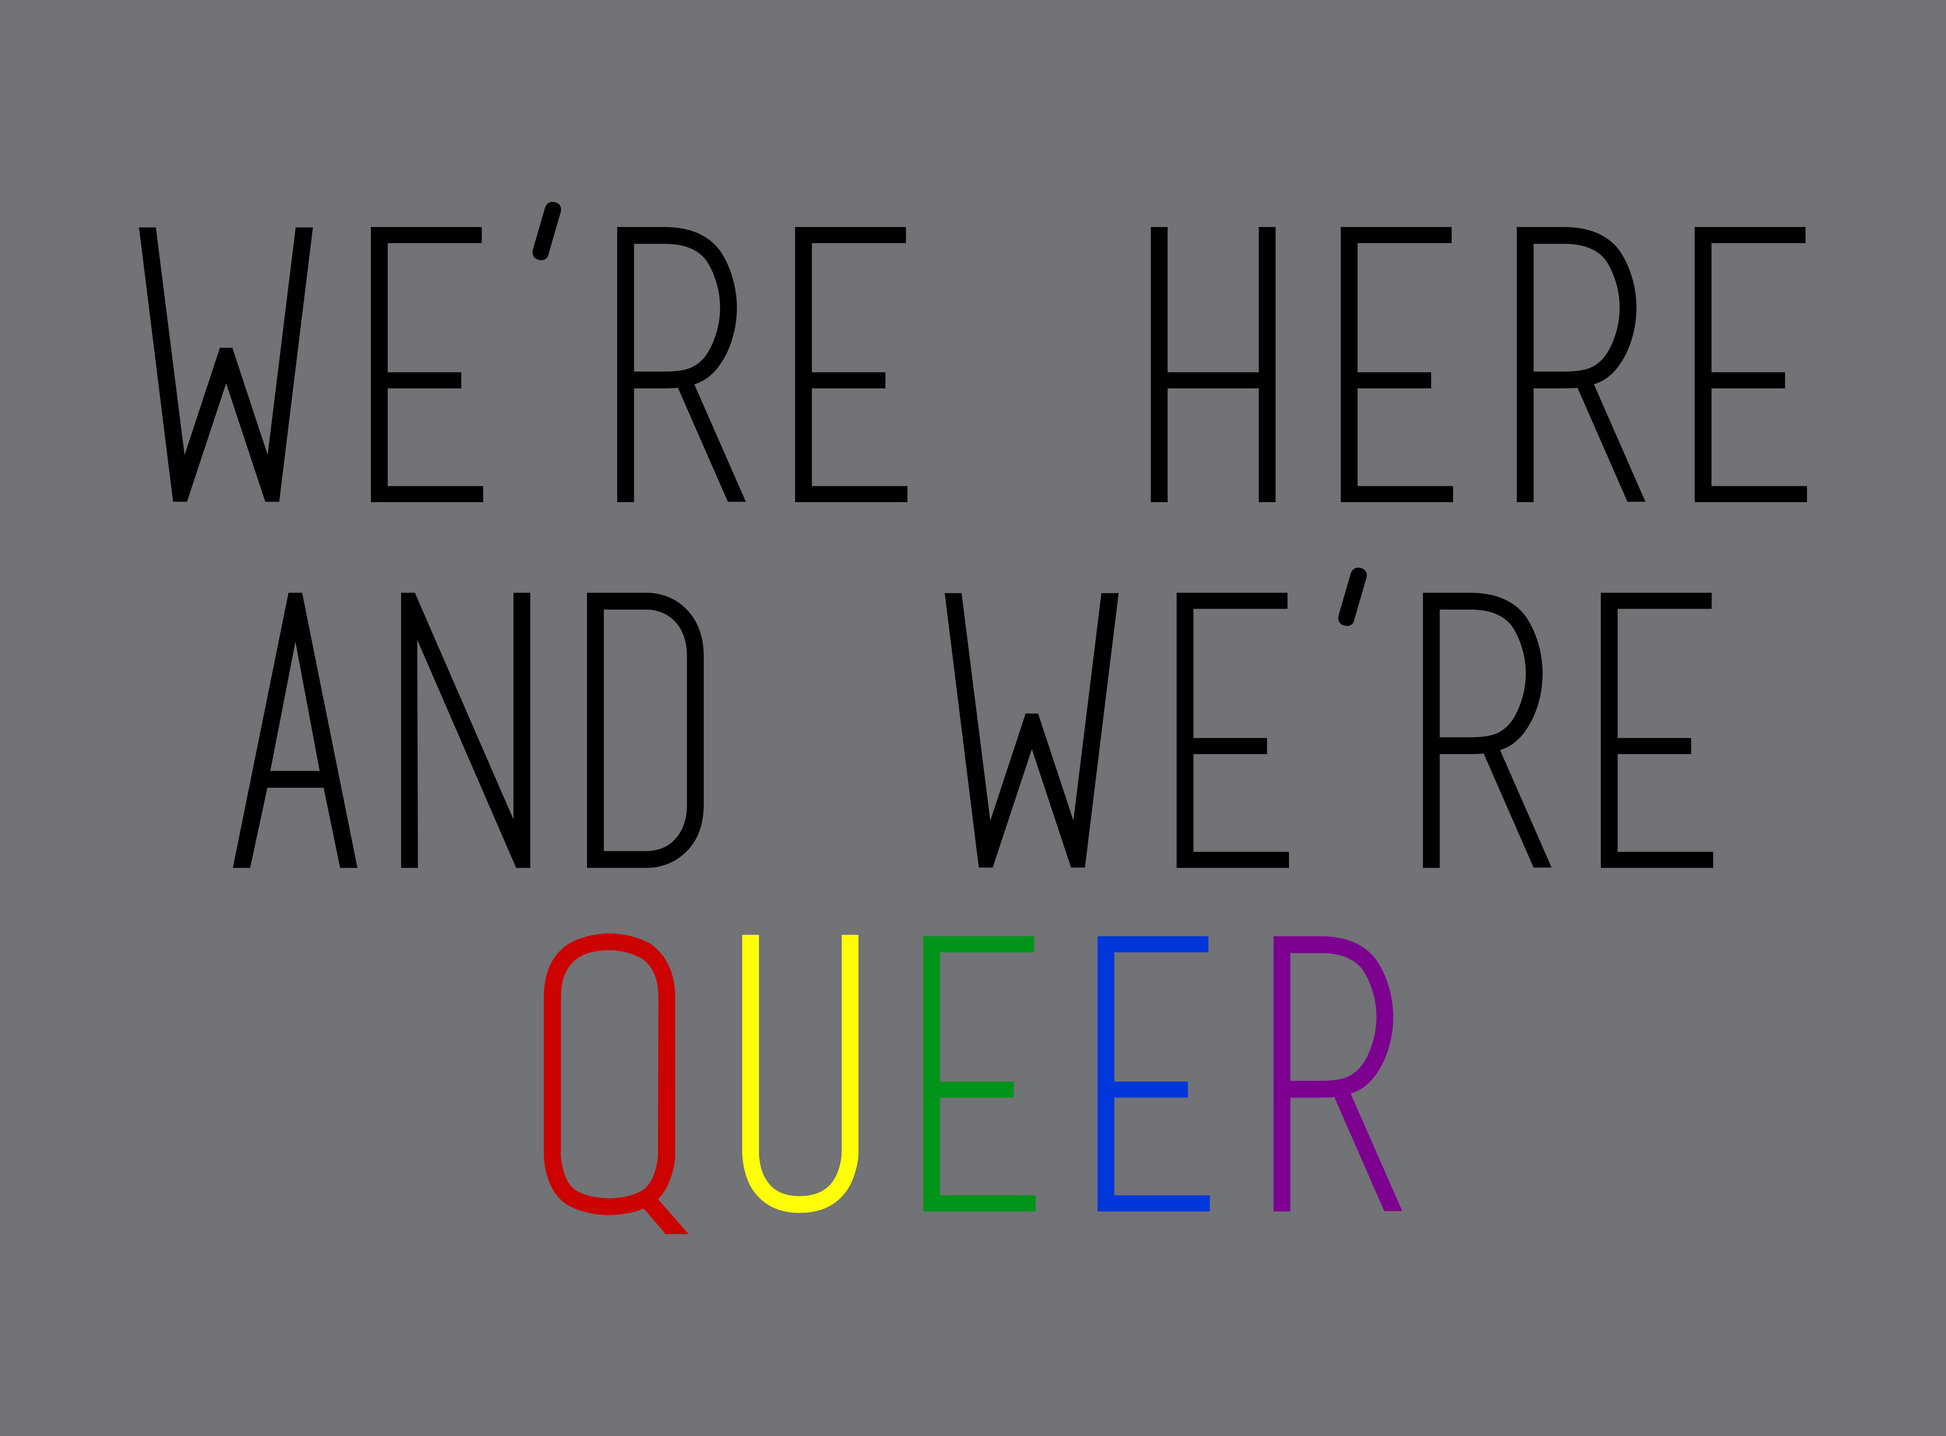 were here were queer rainbow DTG design graphic